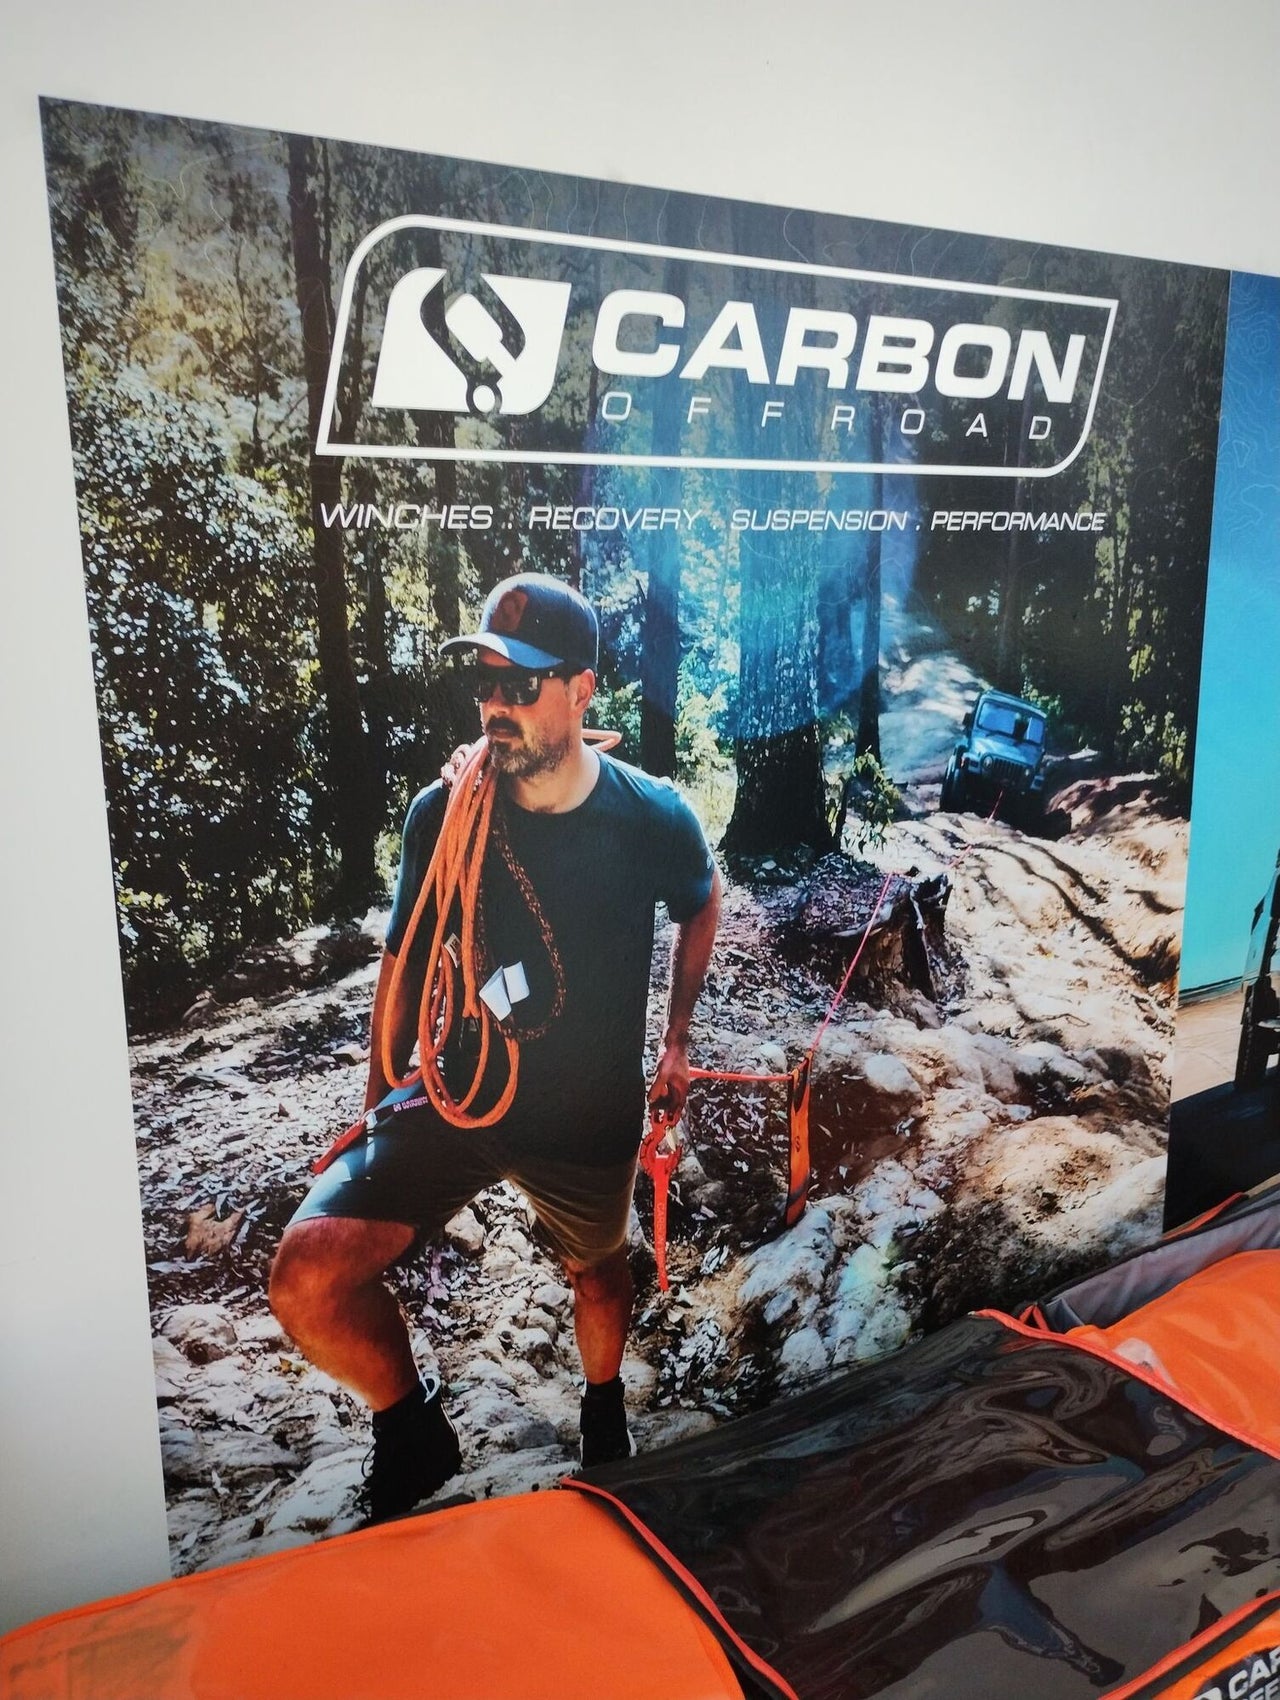 Carbon Offroad Vinyl Wall Banner Sticker 1200 x 1200mm BUSH - CW-VS-12-BU 1